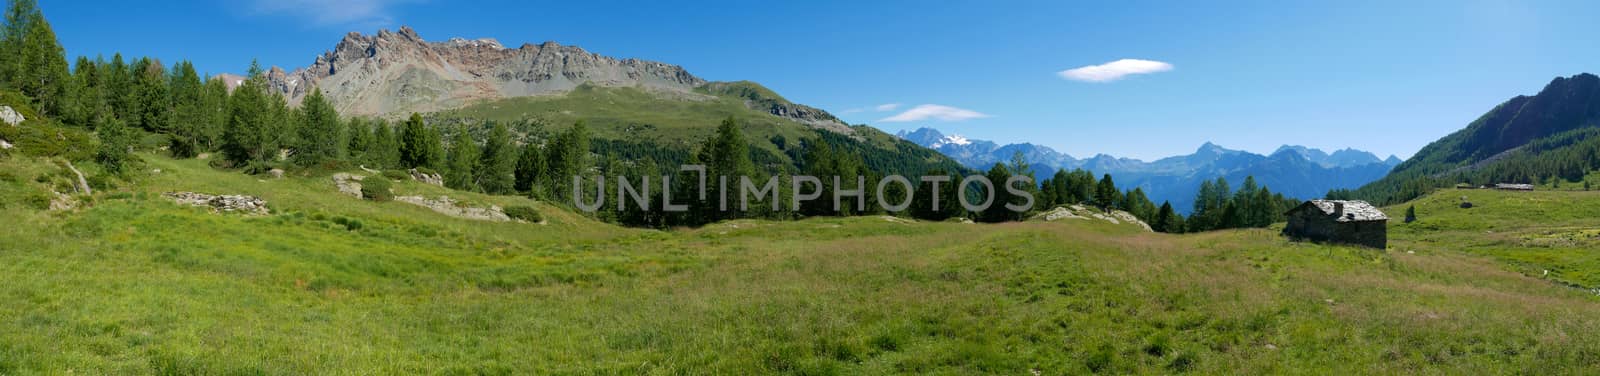 Alpine landscape in summer in Valmalenco
 by gigidread